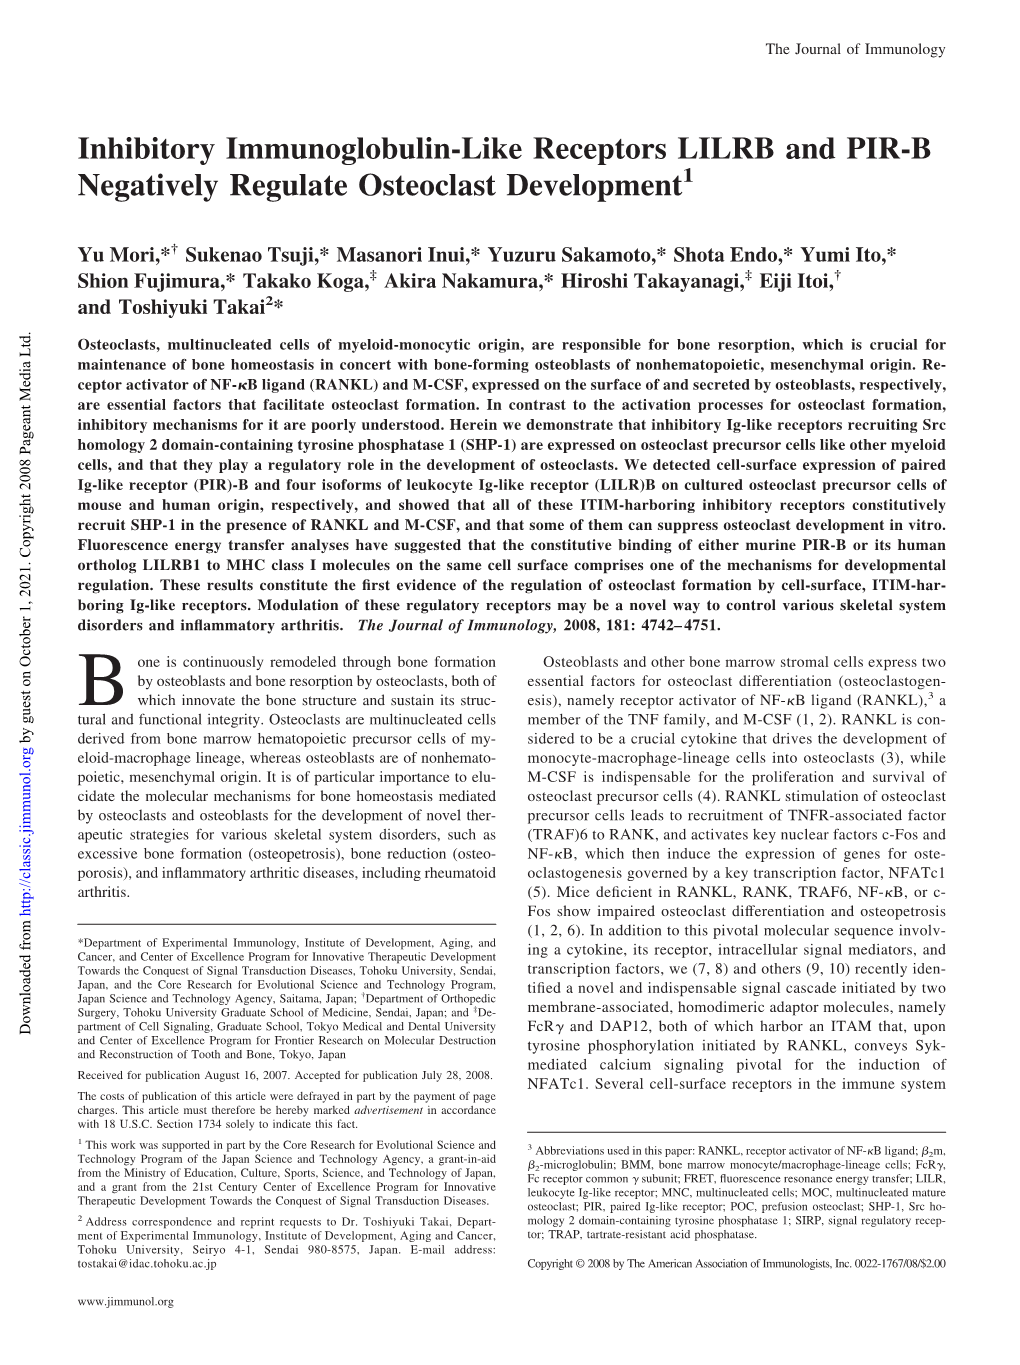 Osteoclast Development LILRB and PIR-B Negatively Regulate